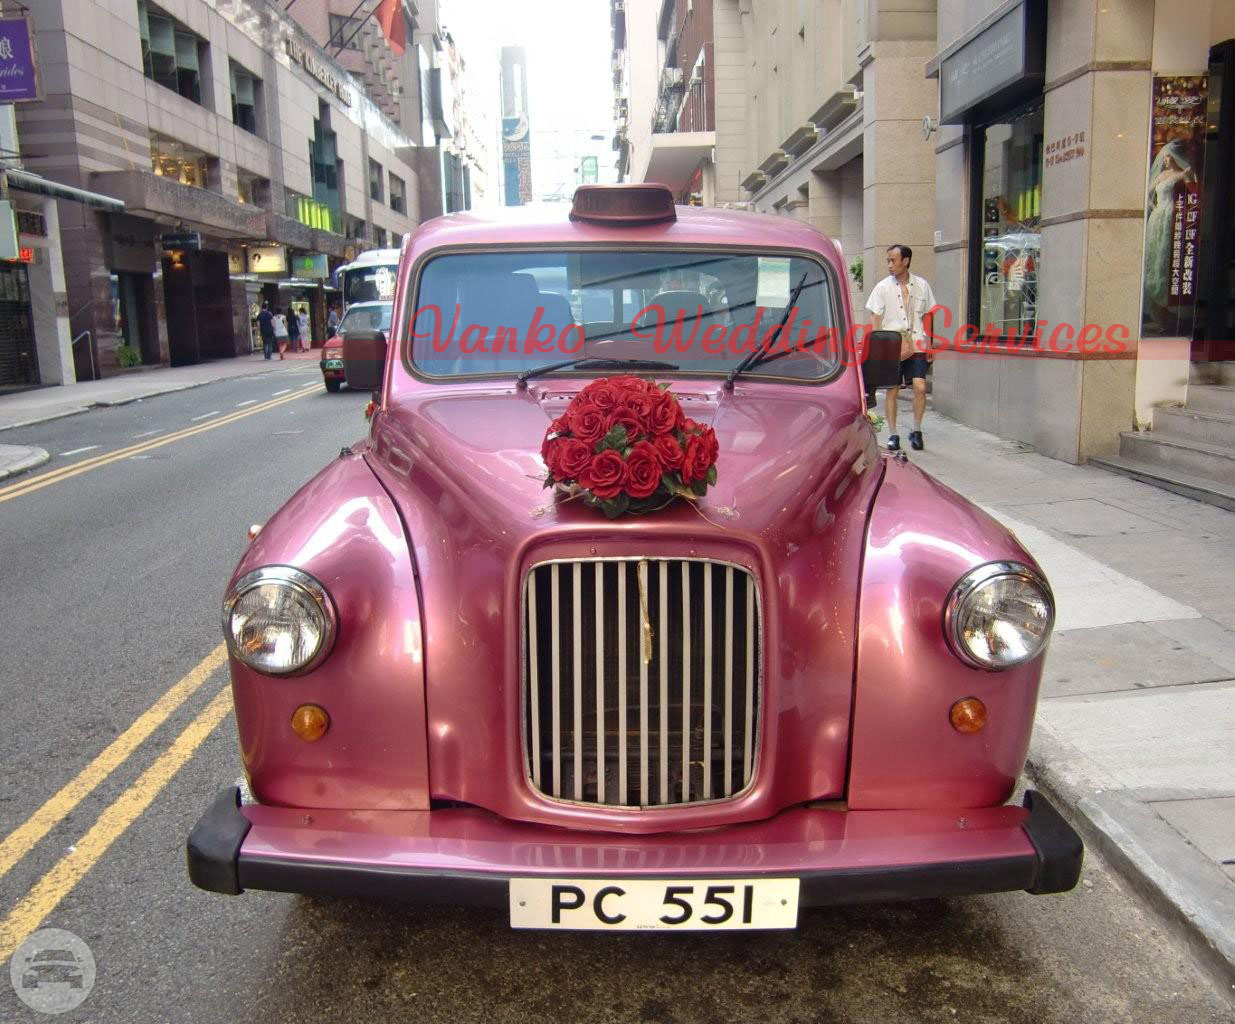 London Taxi - Light Pink
Sedan /
New Territories, Hong Kong

 / Hourly HKD 0.00
